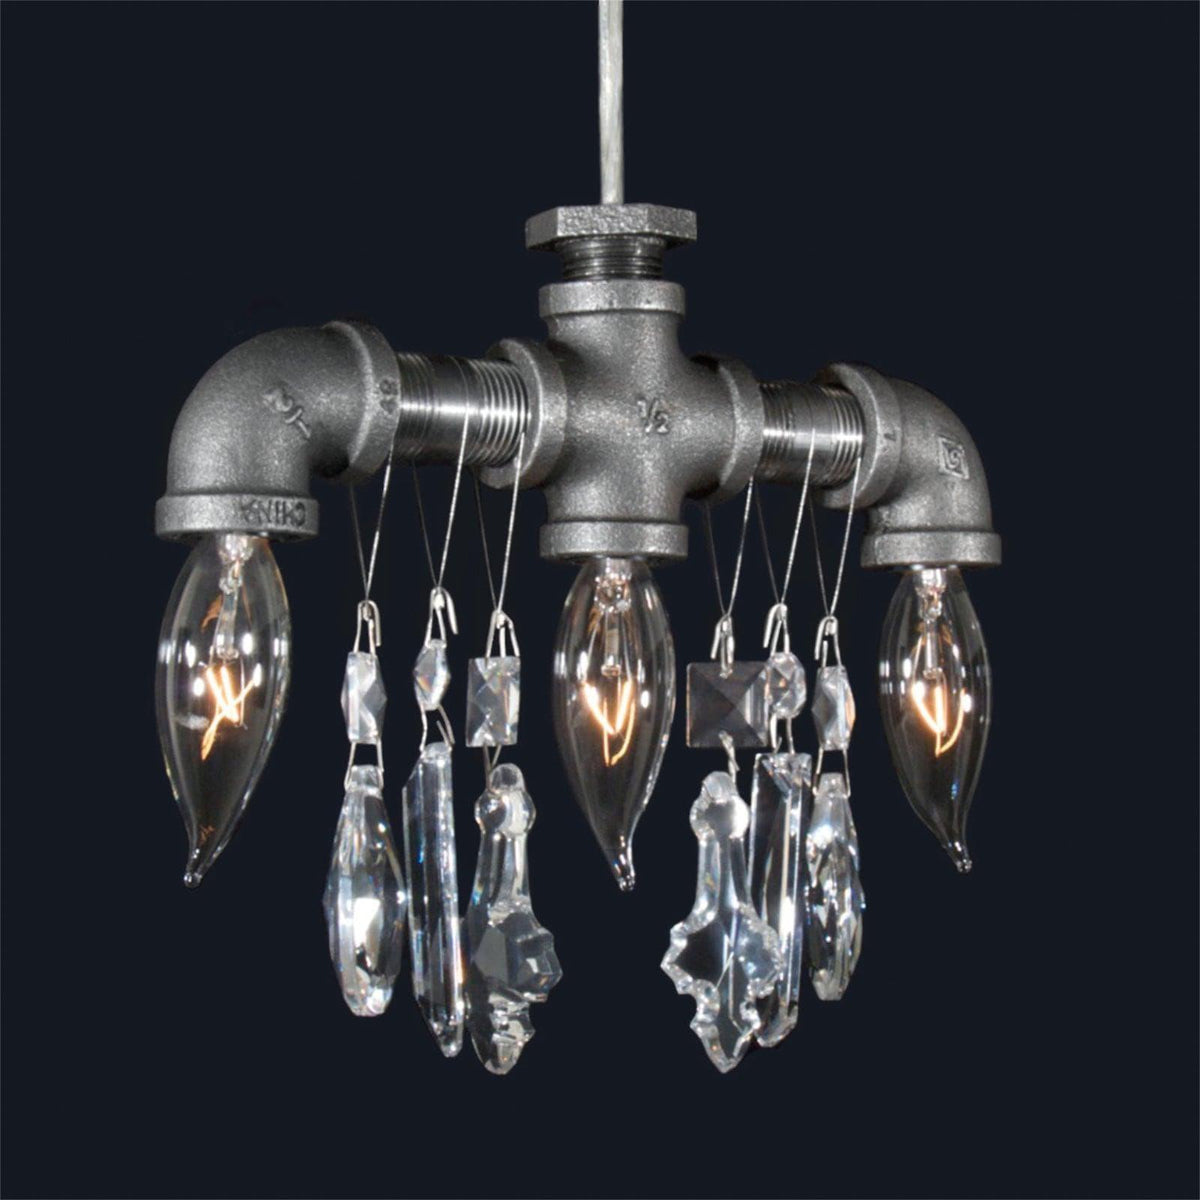 Michael Mchale Designs - Tribeca Chandelier Pendant (3 Bulb) - TR-2 | Montreal Lighting & Hardware